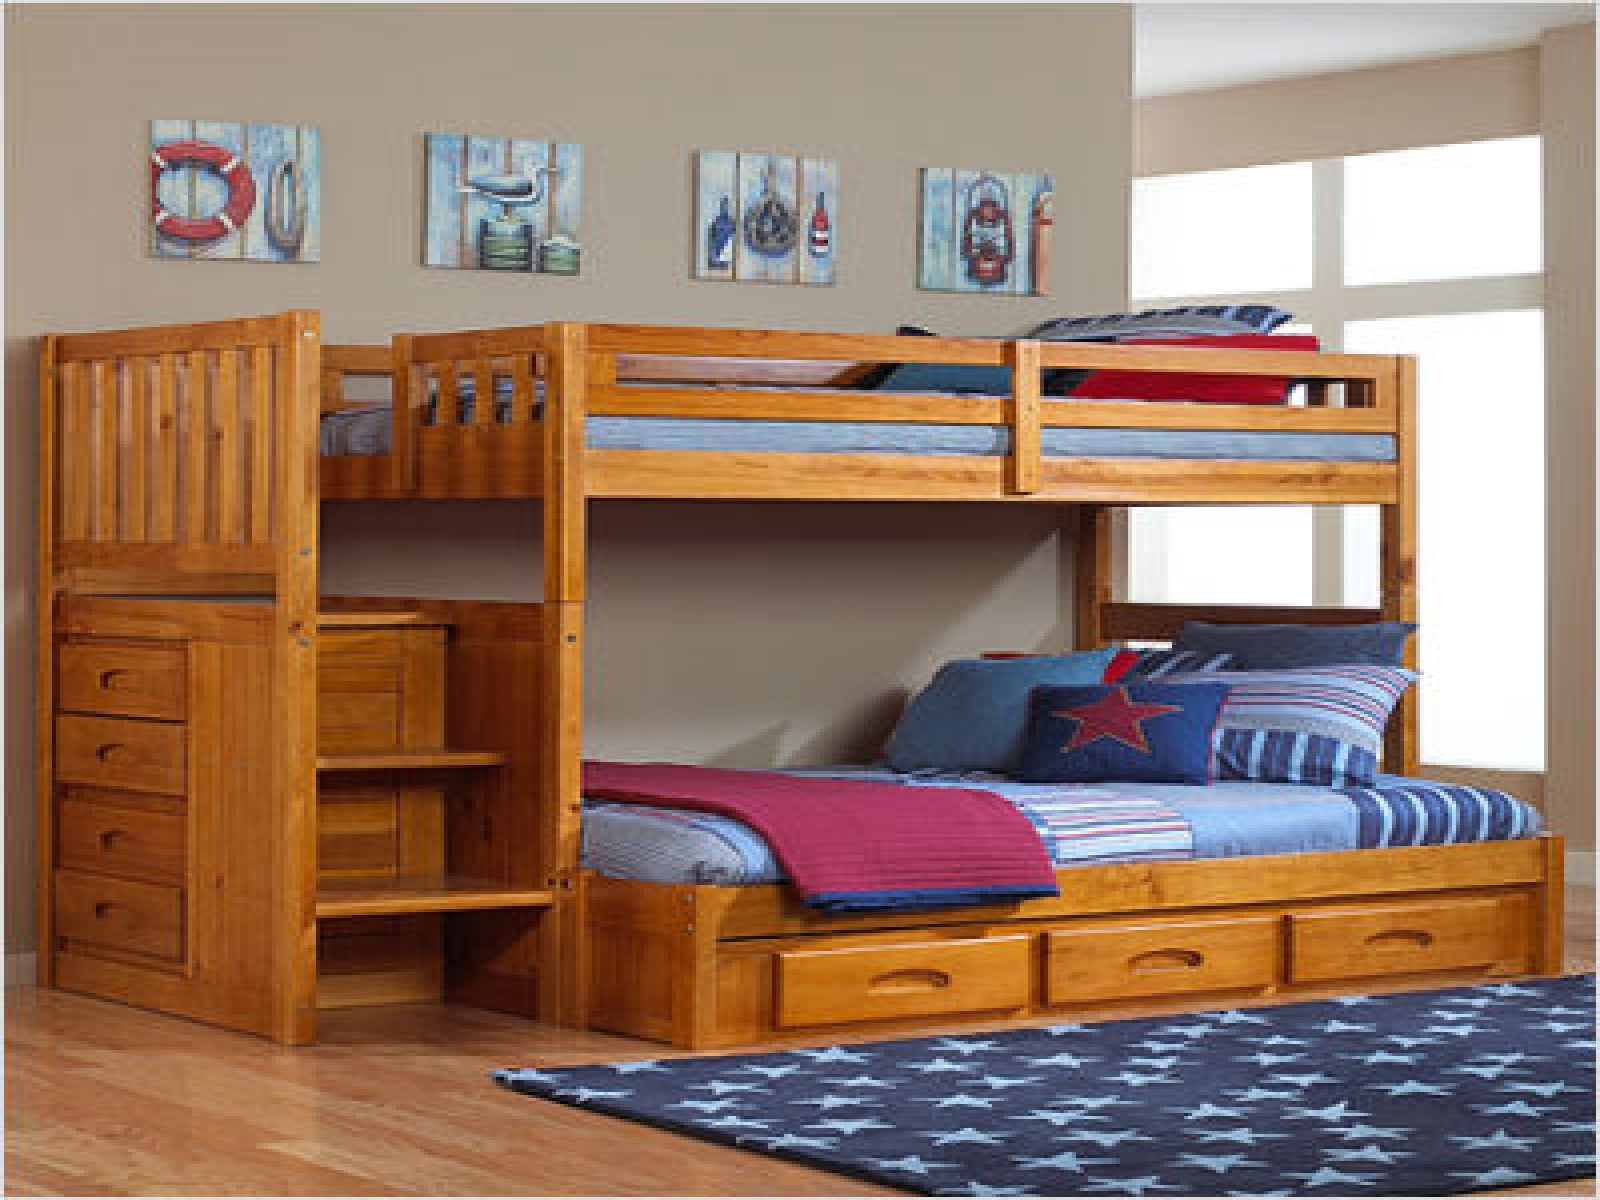 solid wood bedroom furniture san diego